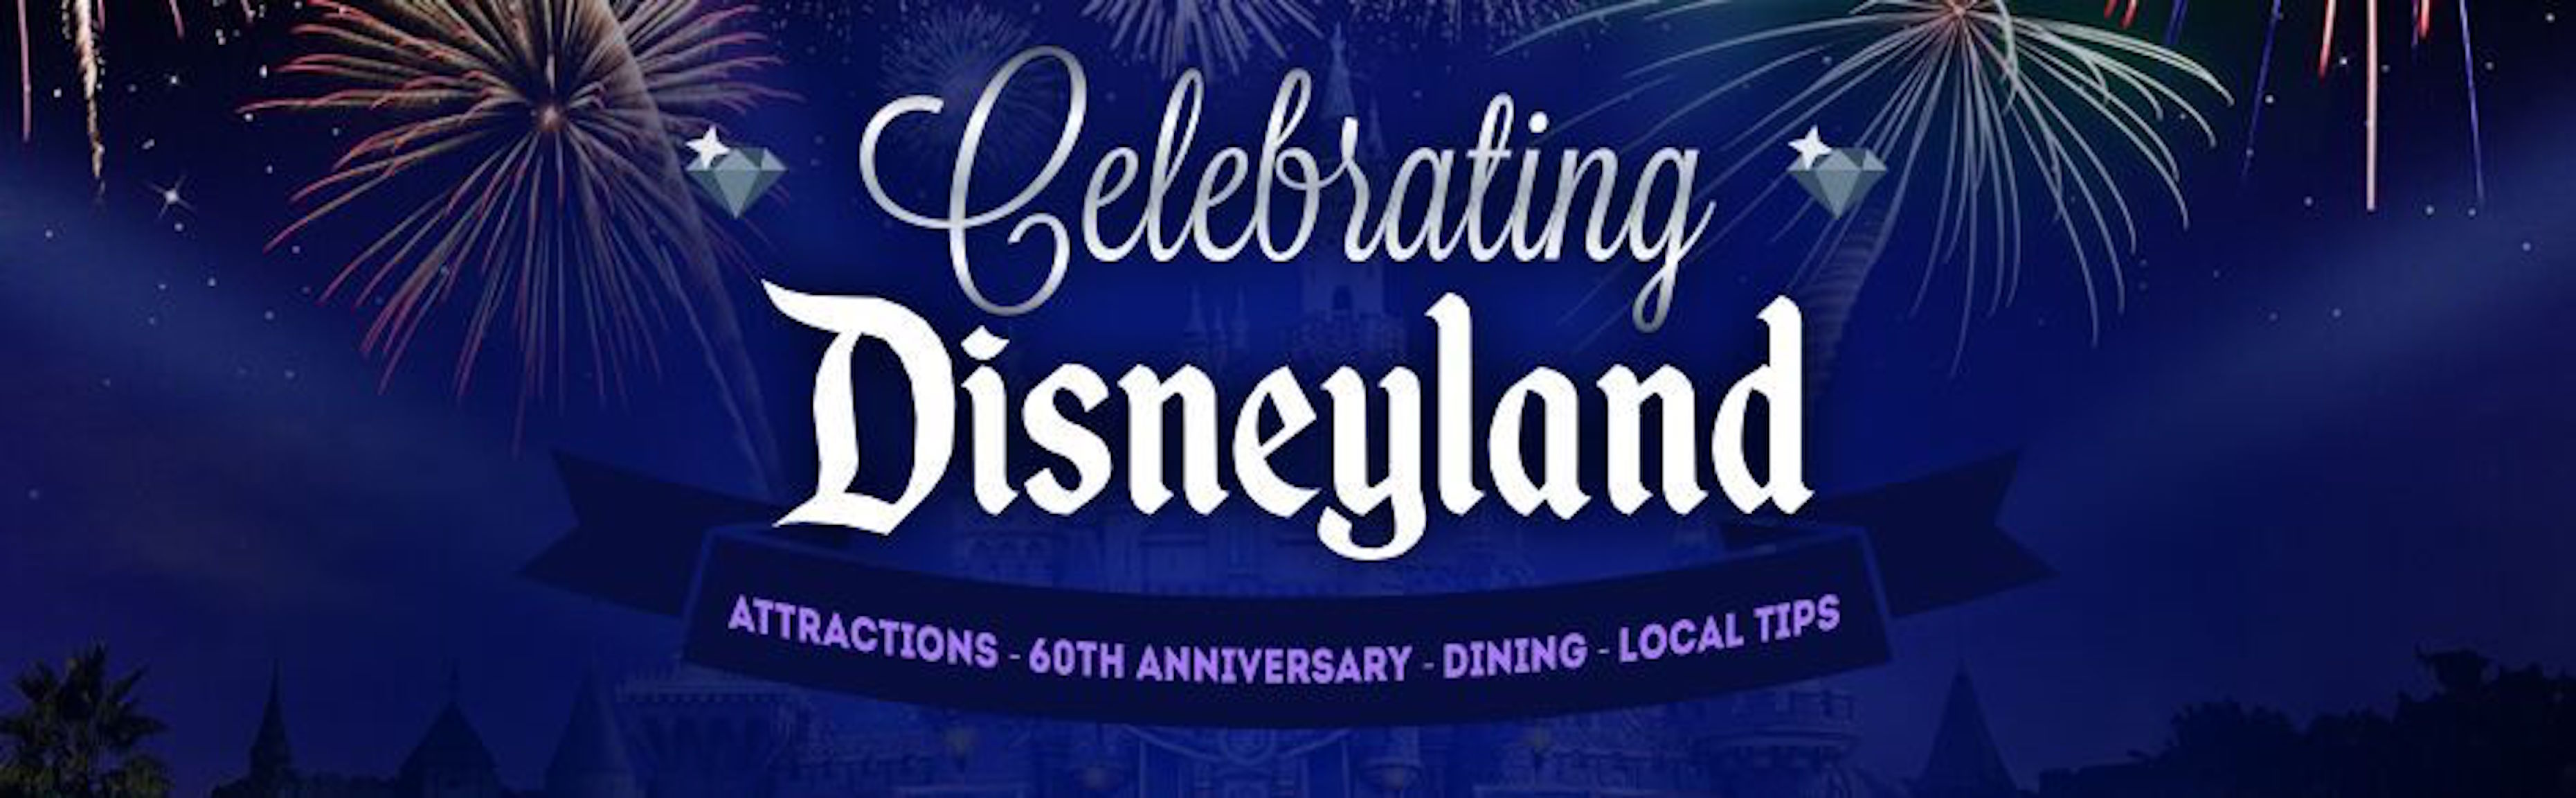 Celebrating Disneyland – 06/13/16 – Week 2 Trivia Contest & Show